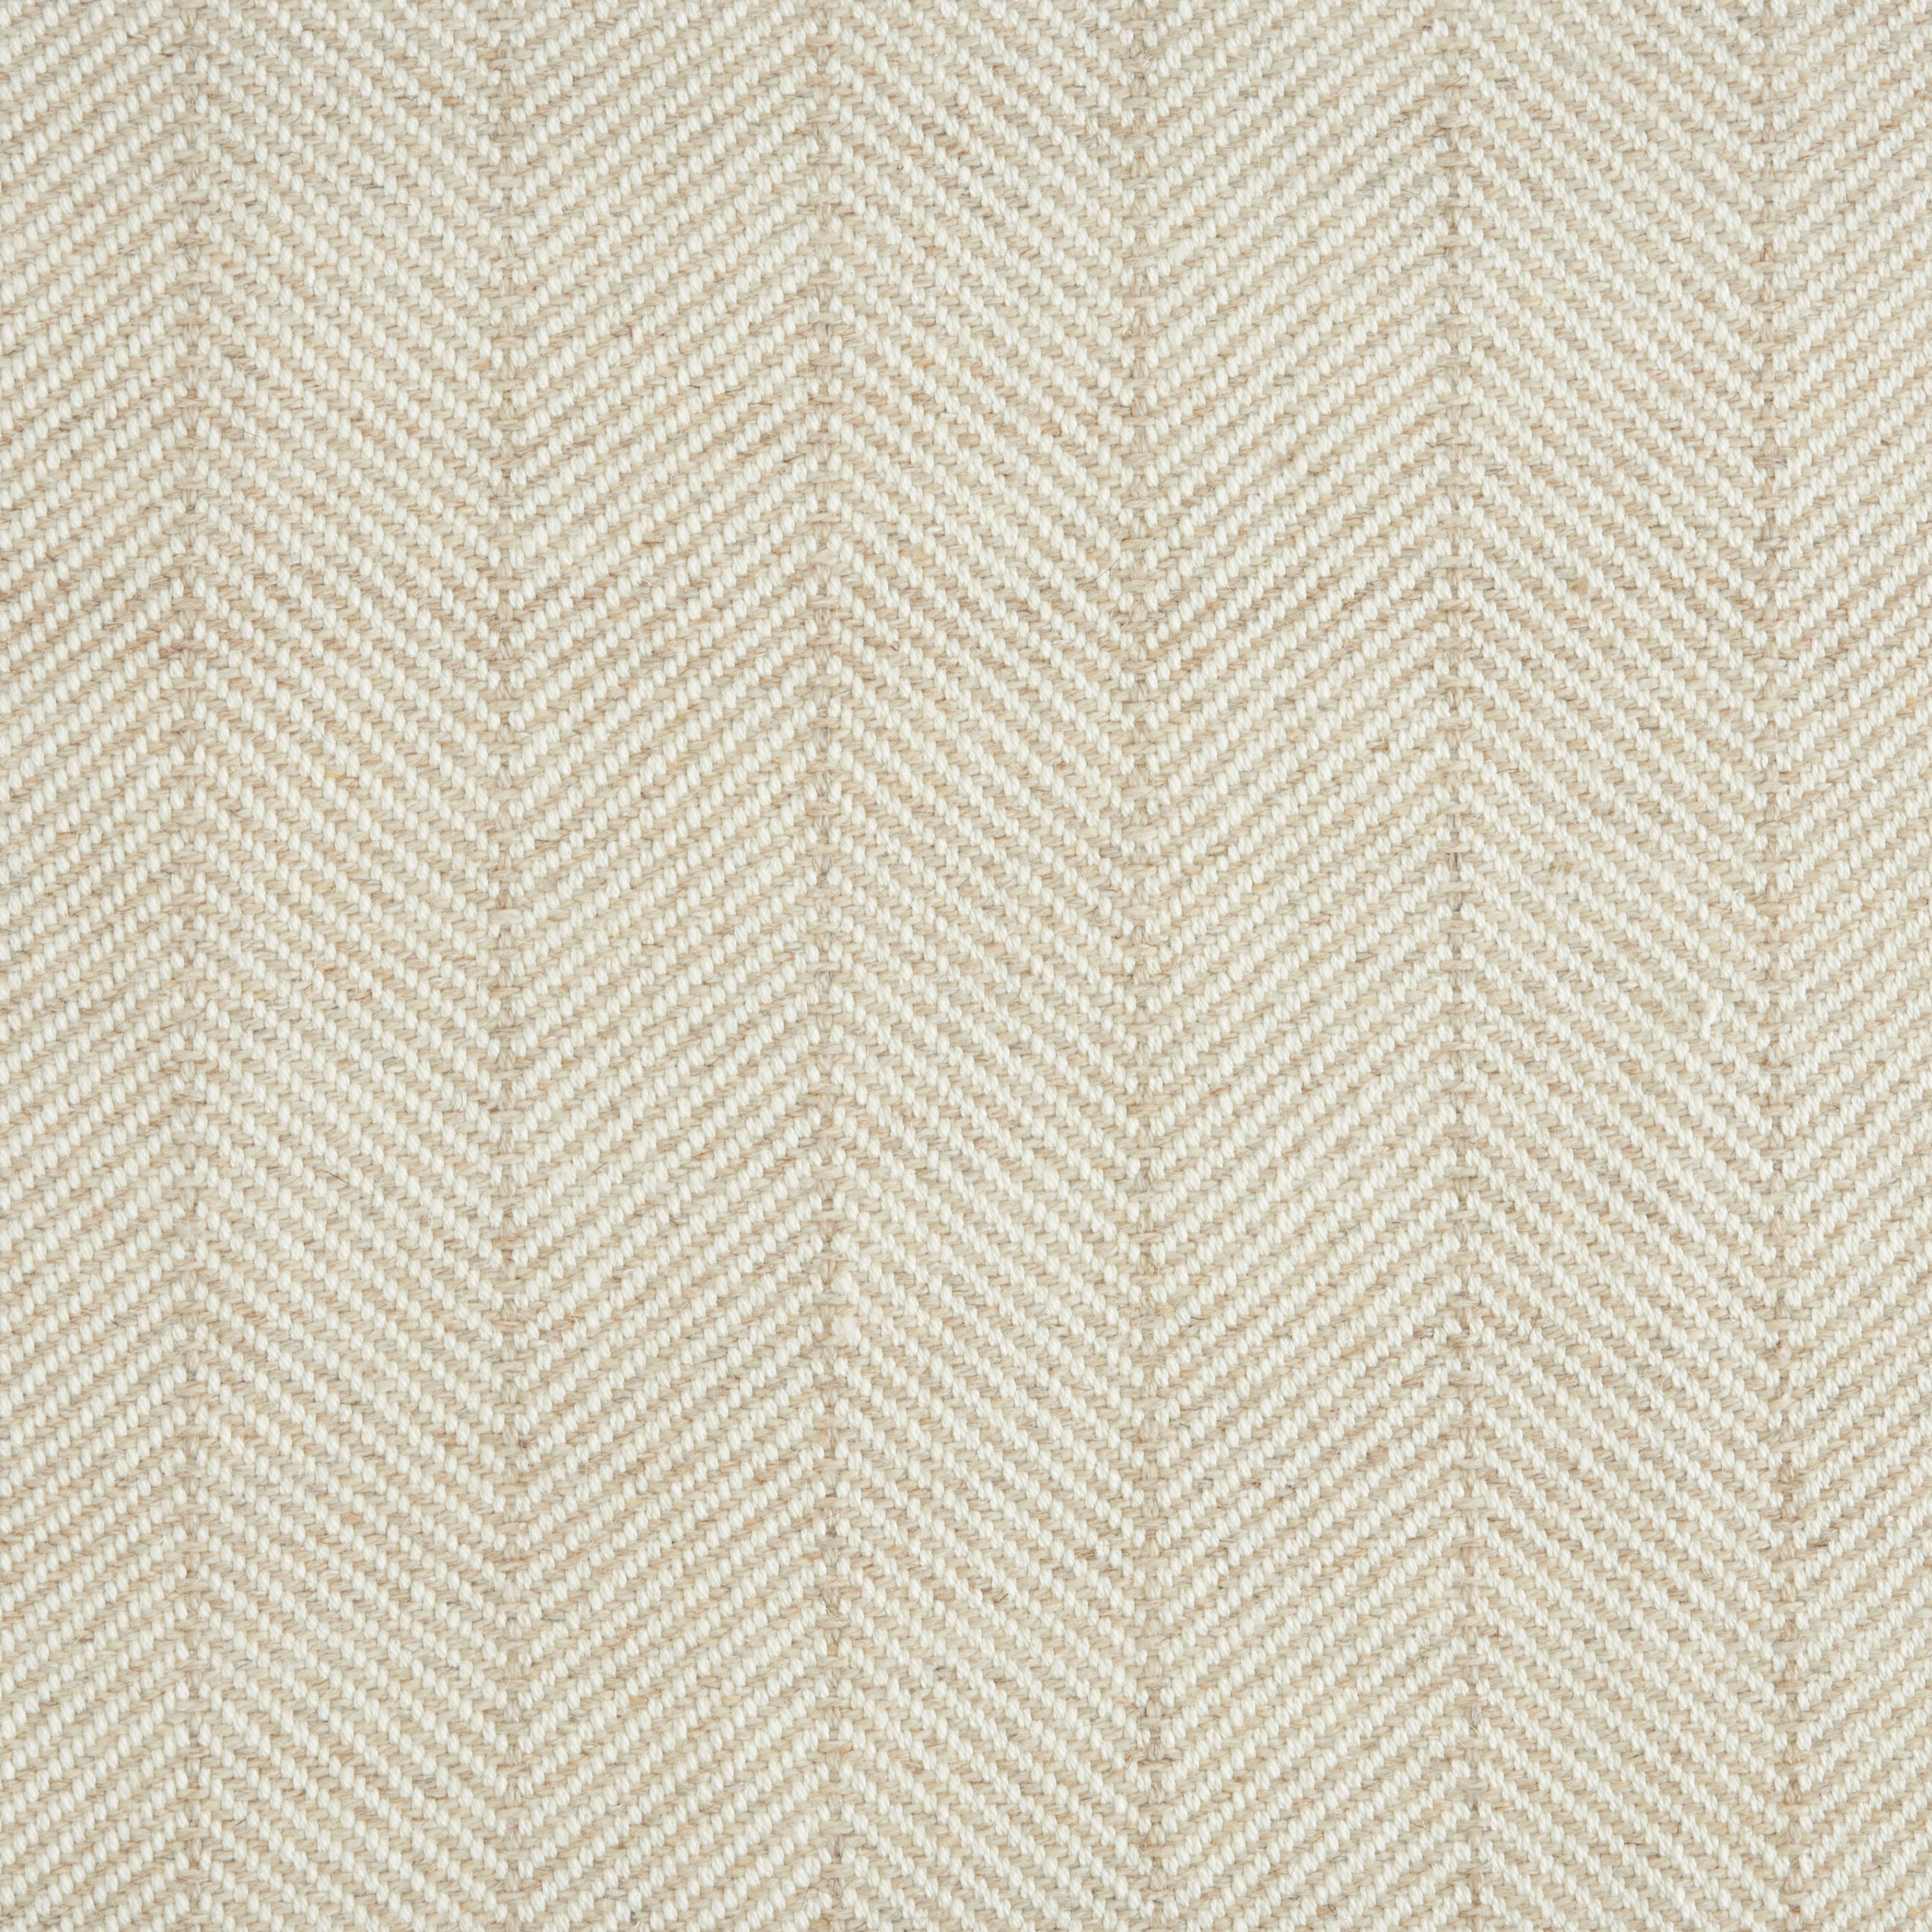 Wool-polysilk broadloom carpet swatch in a chevron stripe pattern in cream and tan.